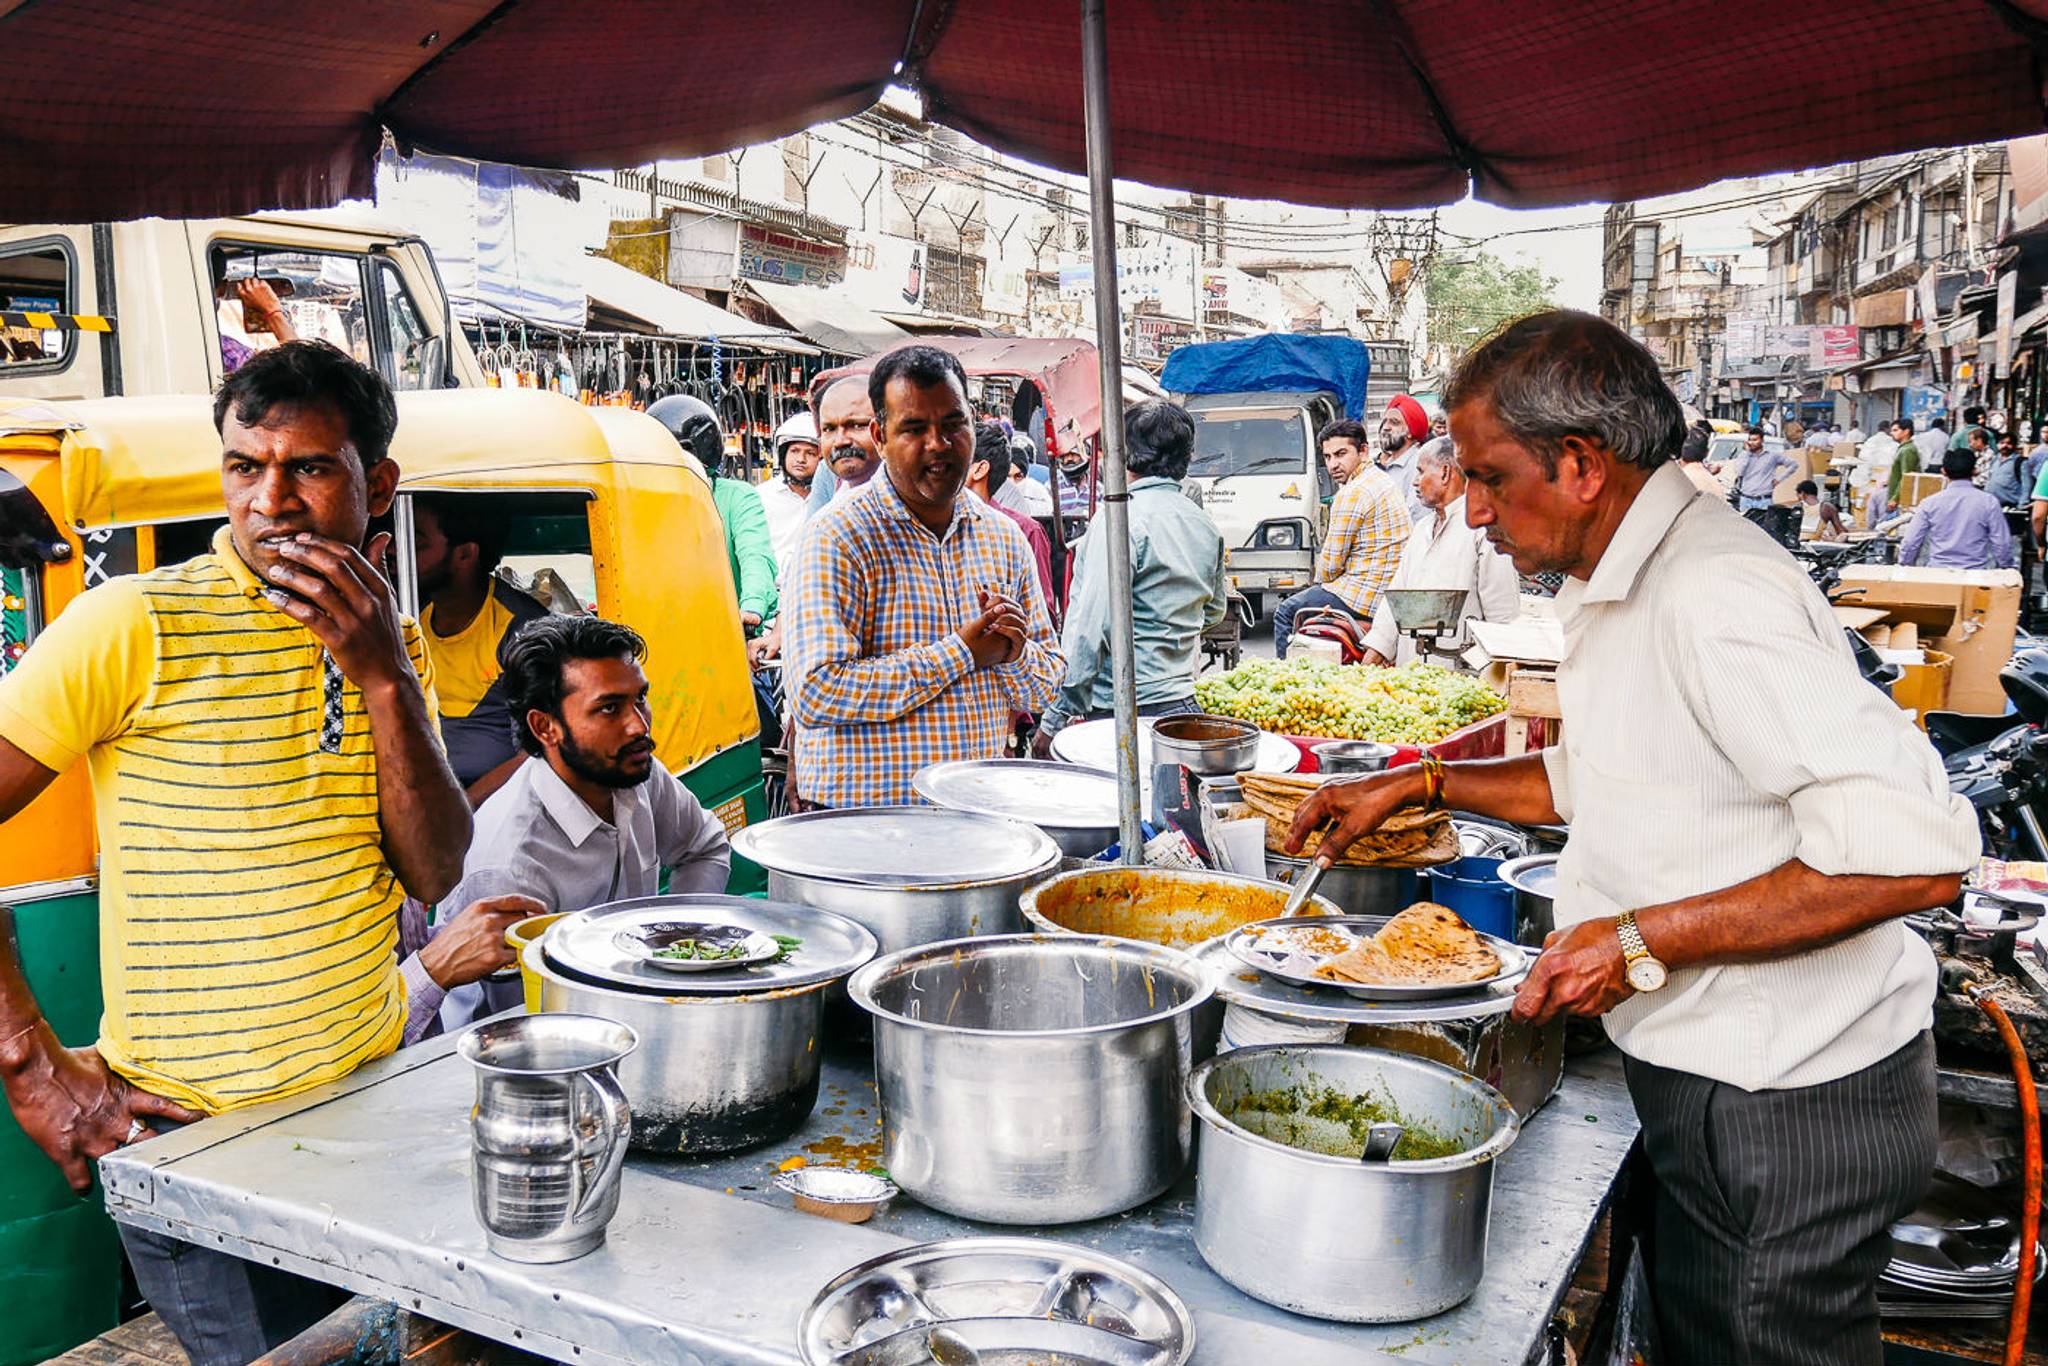 Quick service restaurants struggle in India